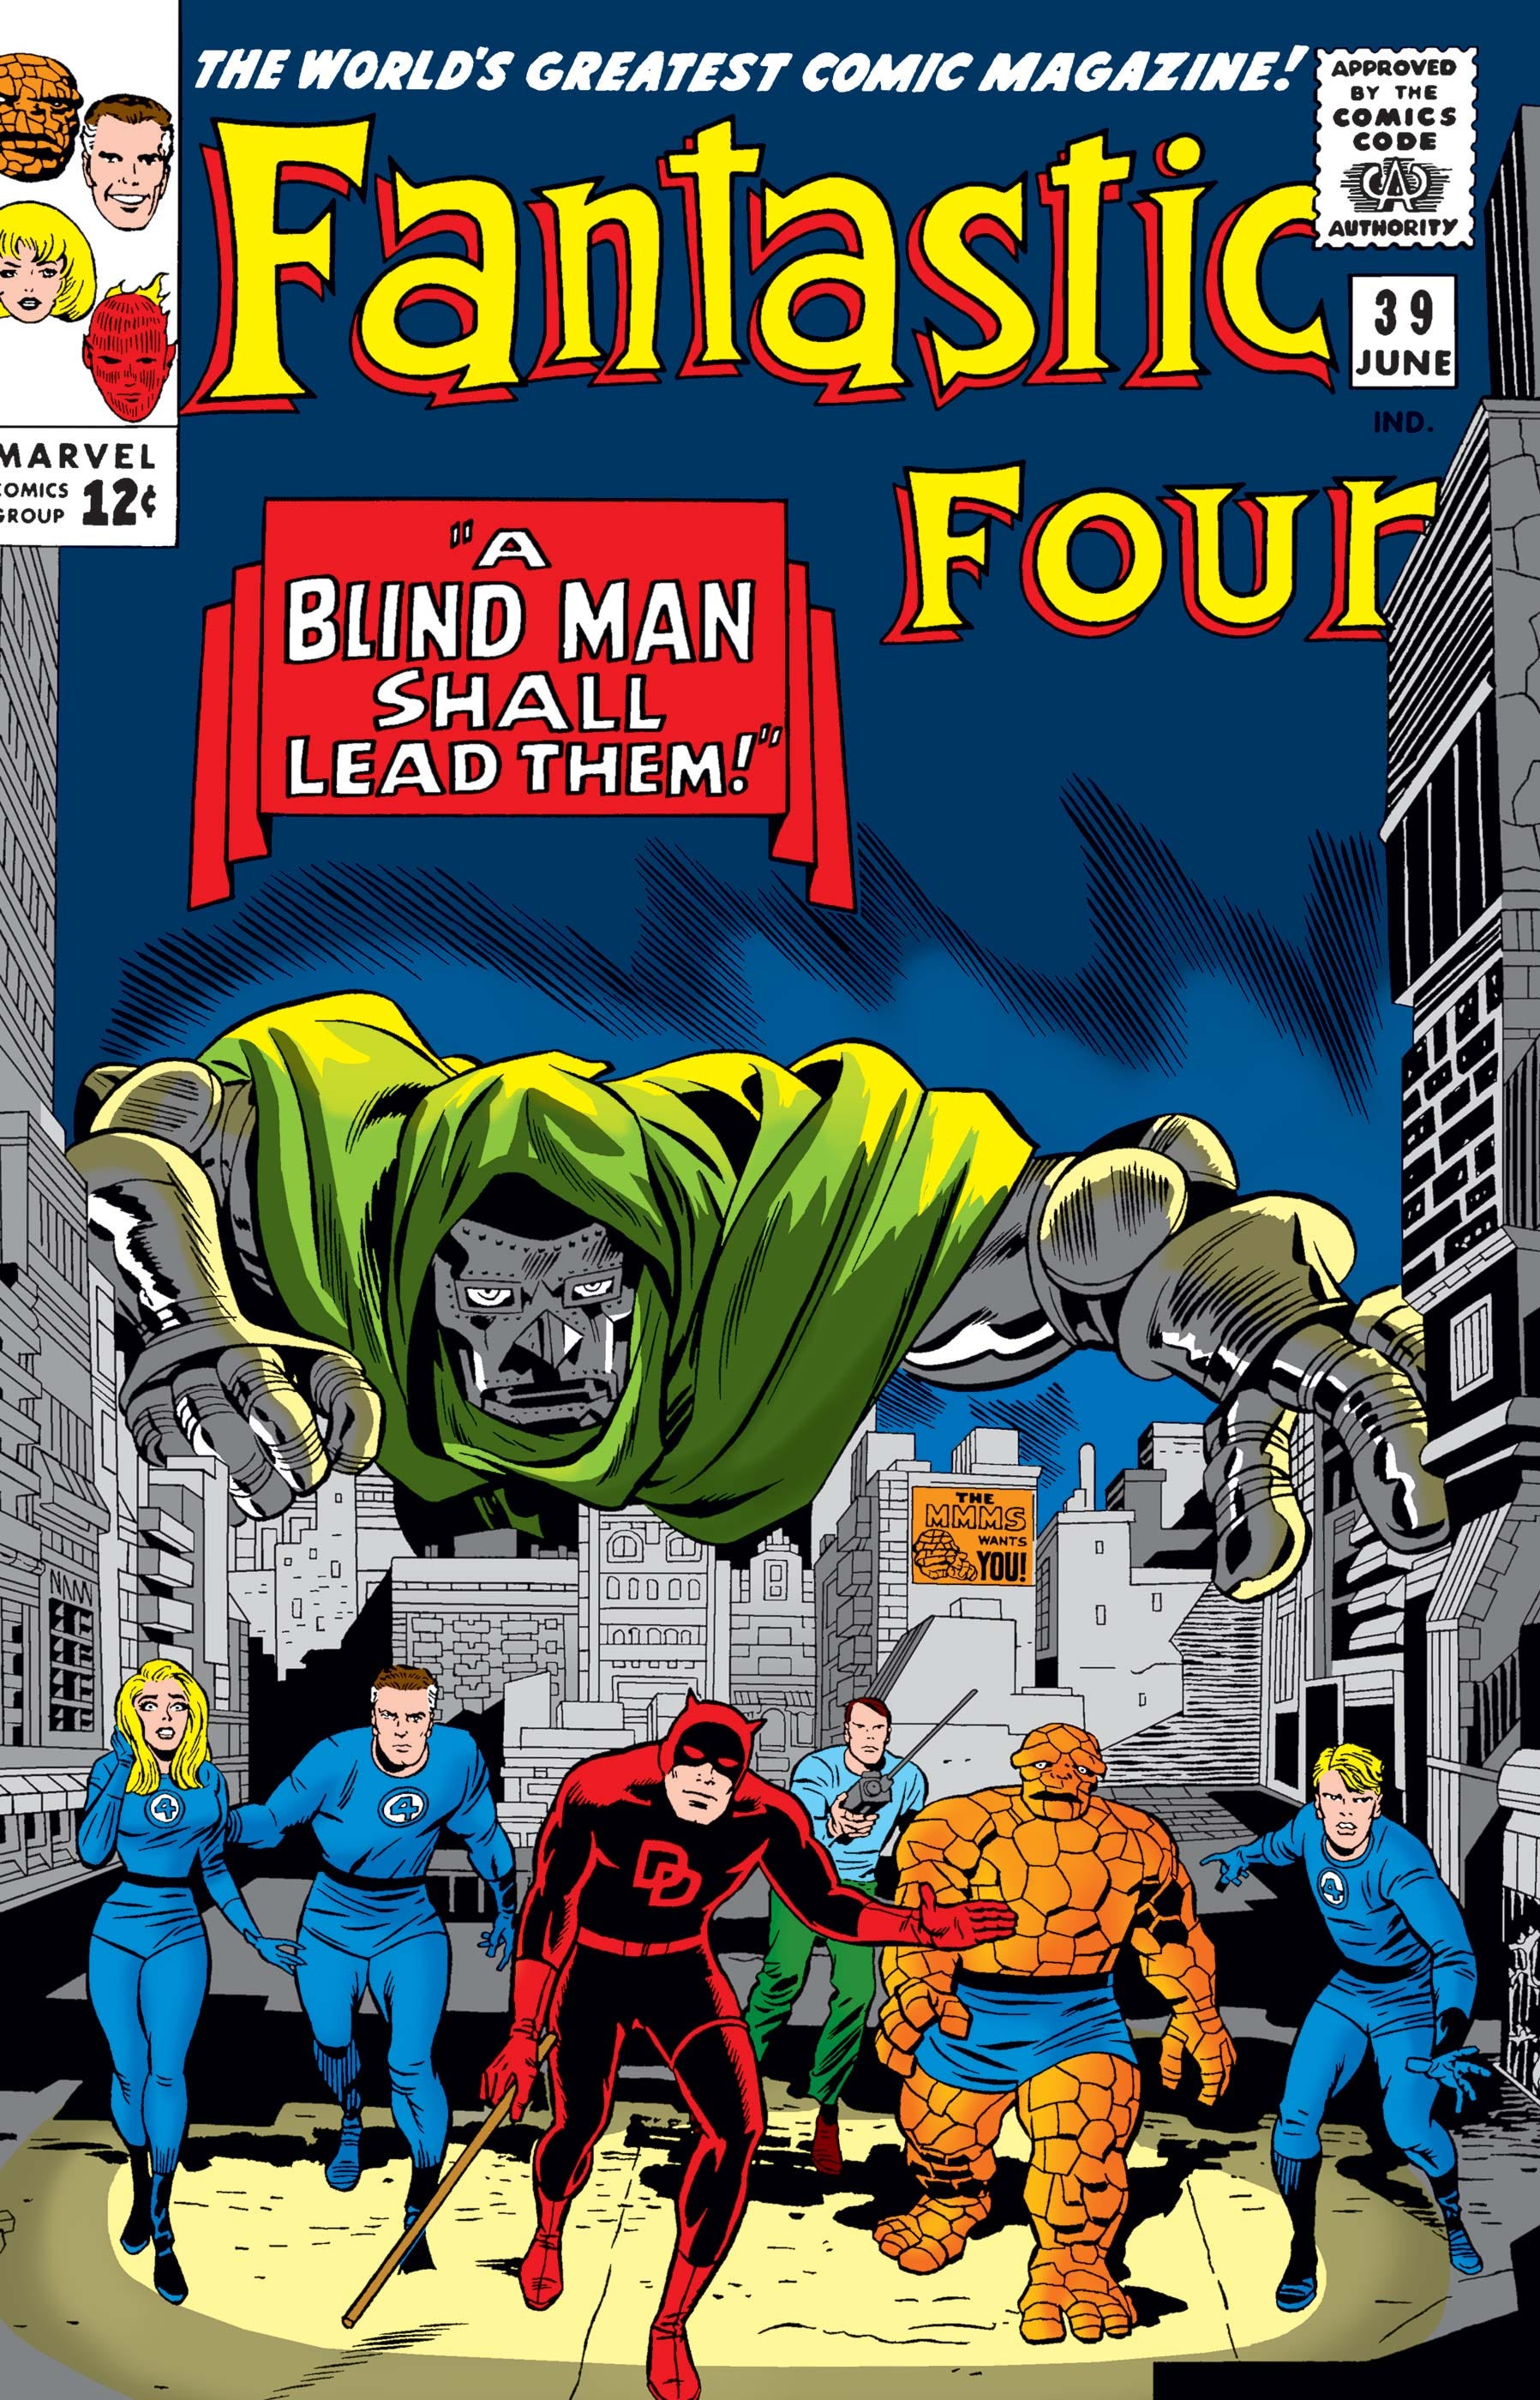 E202: The Fantastic Three? Four?? Five??? (Fantastic Four #39 and #40) -- June/July 1965